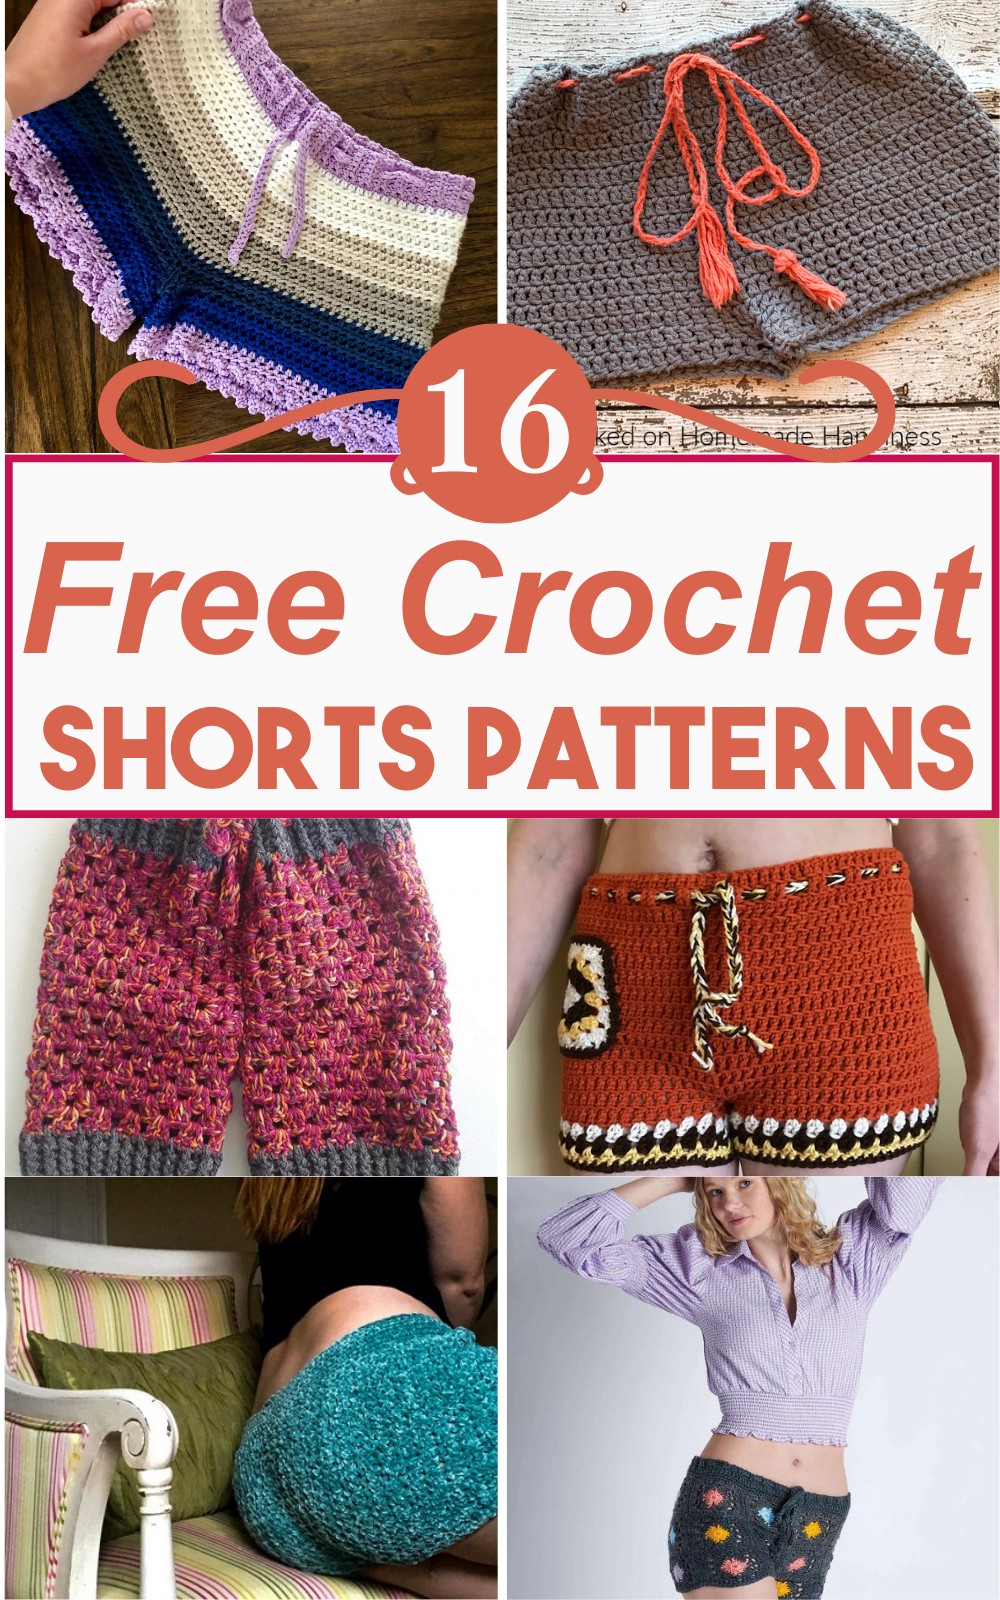 Crochet Shorts Patterns